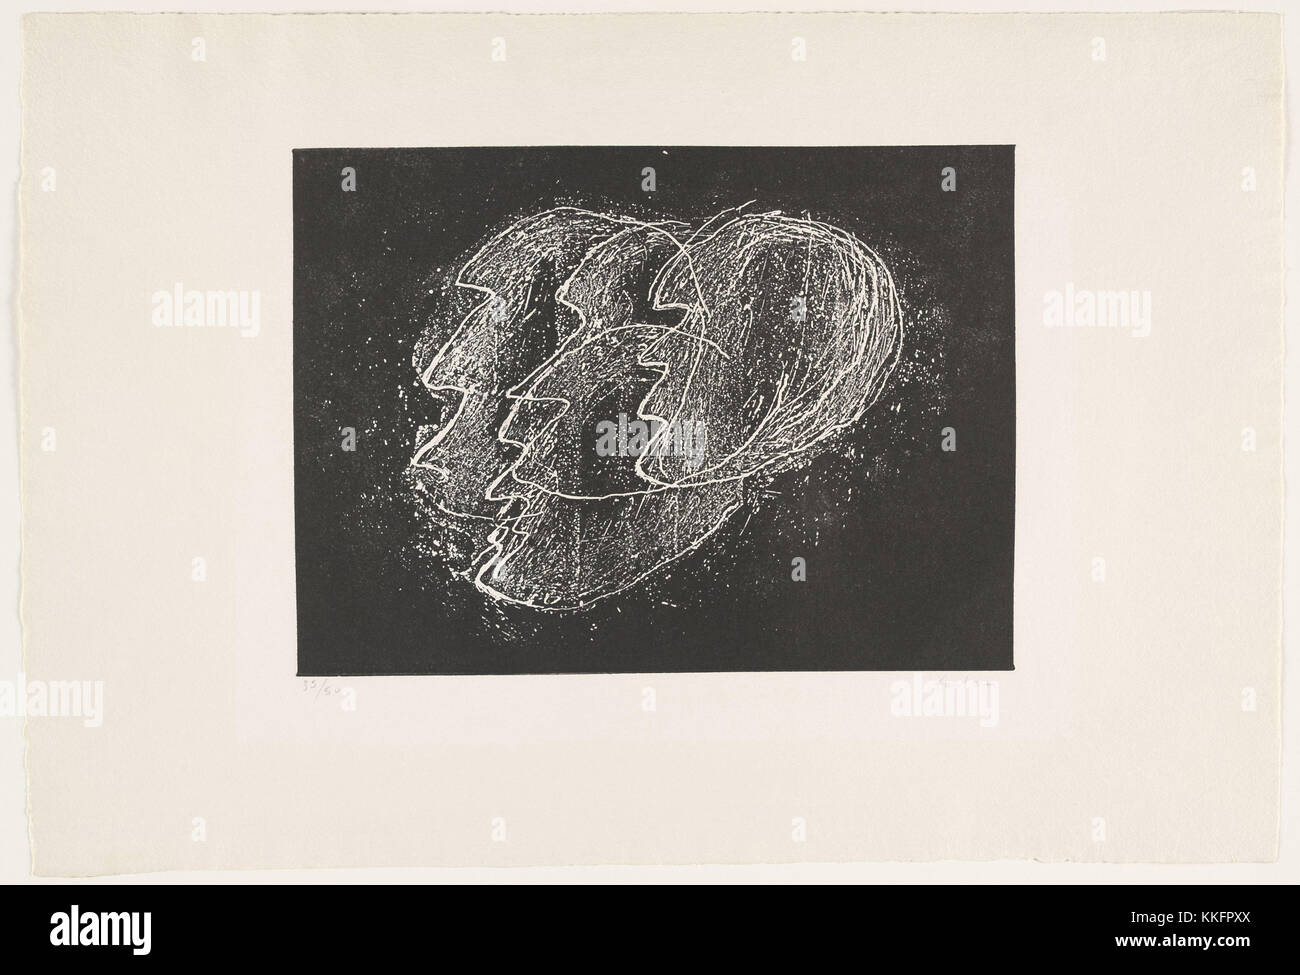 Jean Fautrier. (French, 1898-1964). Otages fond noir (Hostages Black Ground). (1944-47, printed c. 1962). Etching, relief printed, plate: 9 1/4 x 12 9/16' (23.5 x 31.9 cm); sheet: 14 7/8 x 21 15/16' (37.8 x 55.8 cm). Publisher: Édition Couturier, Paris. Printer: Jacques David, Paris. Edition: 50. Arthur B. Stanton Fund. © 2008 Artists Rights Society (ARS), New York / ADAGP, Paris Stock Photo